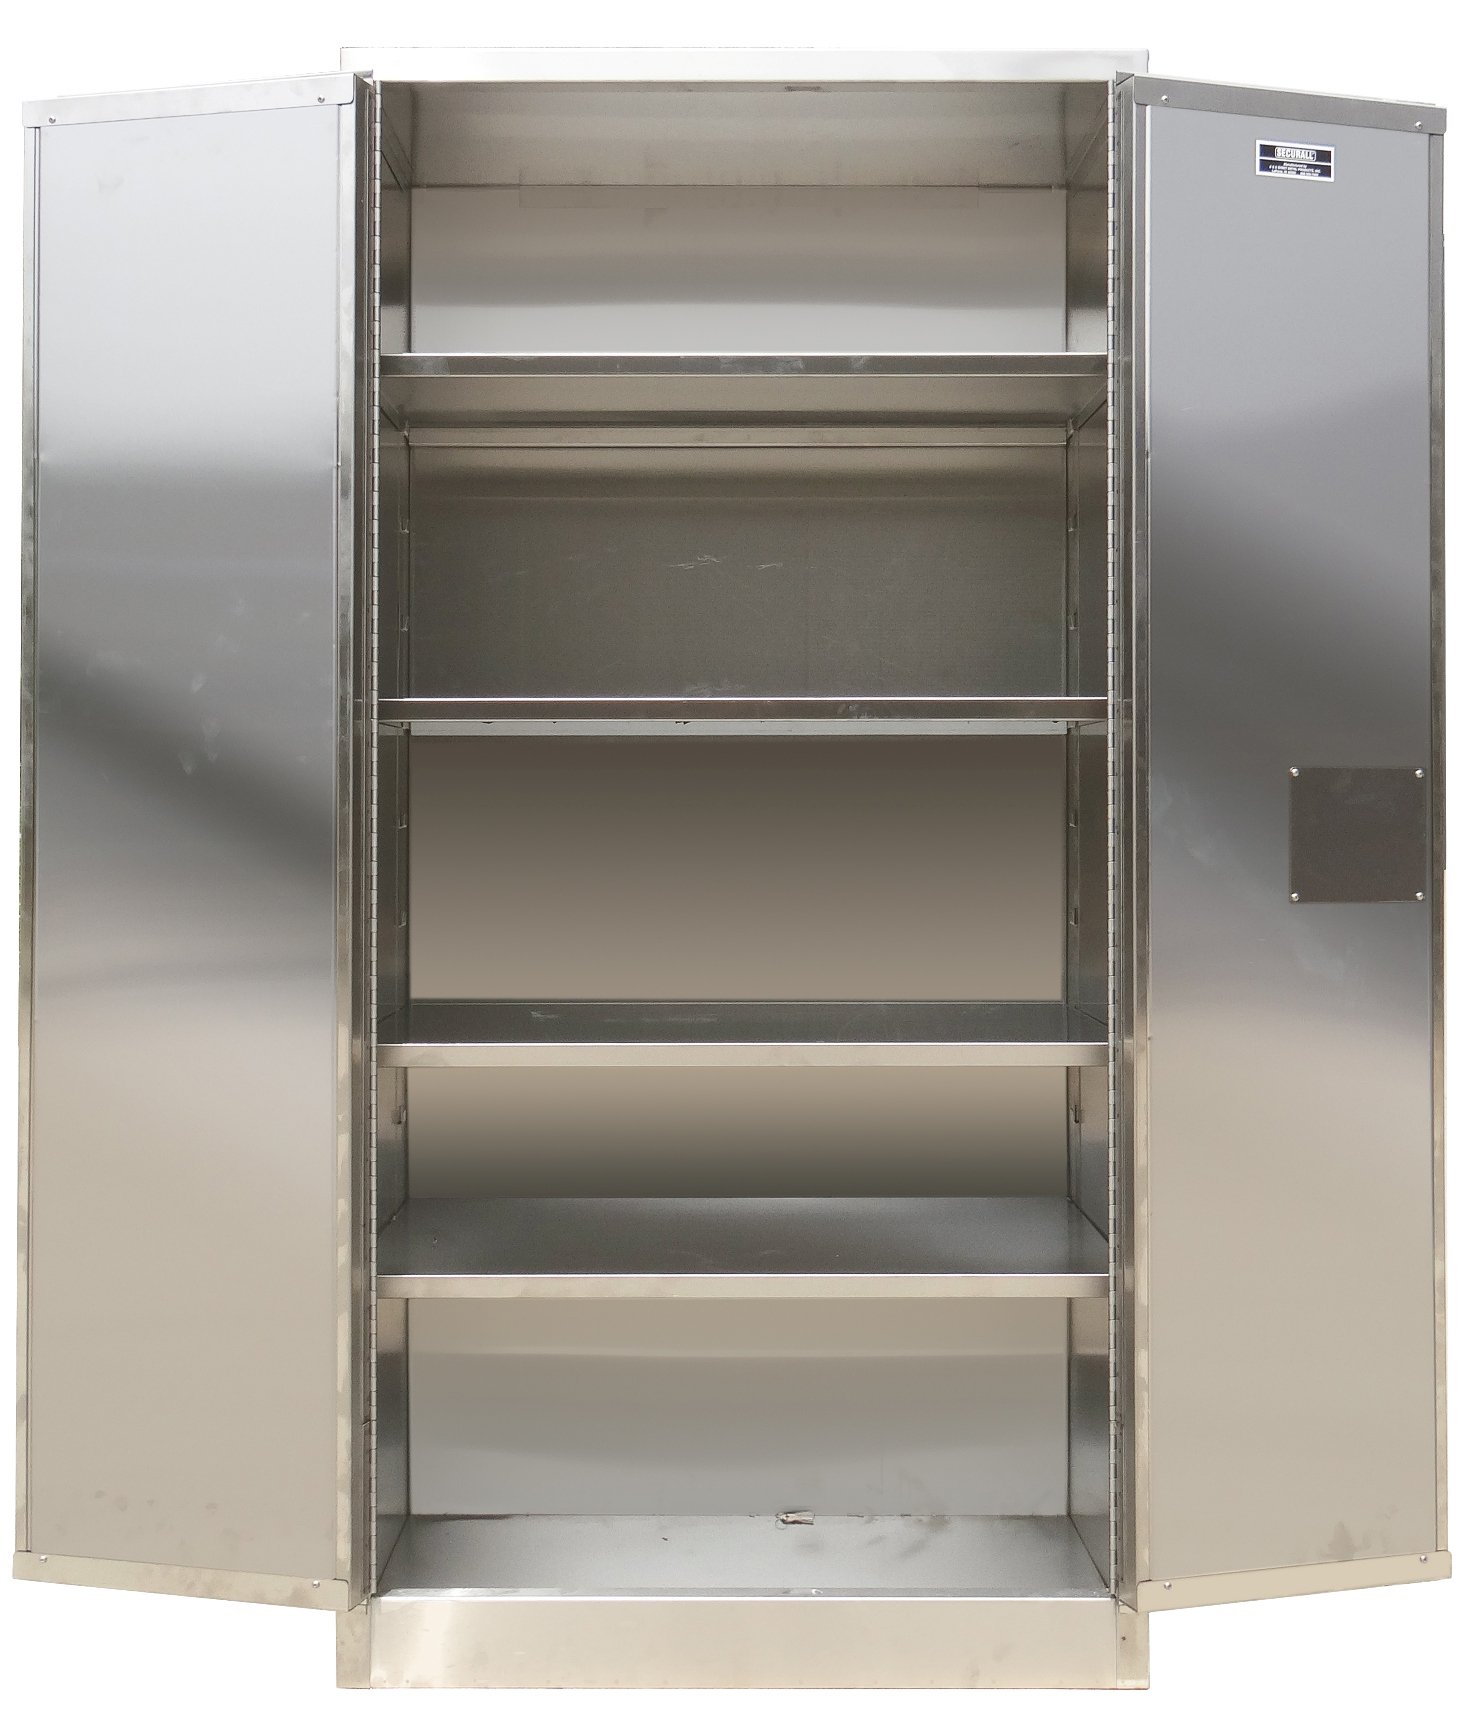 Stainless Steel Industrial Storage Cabinet